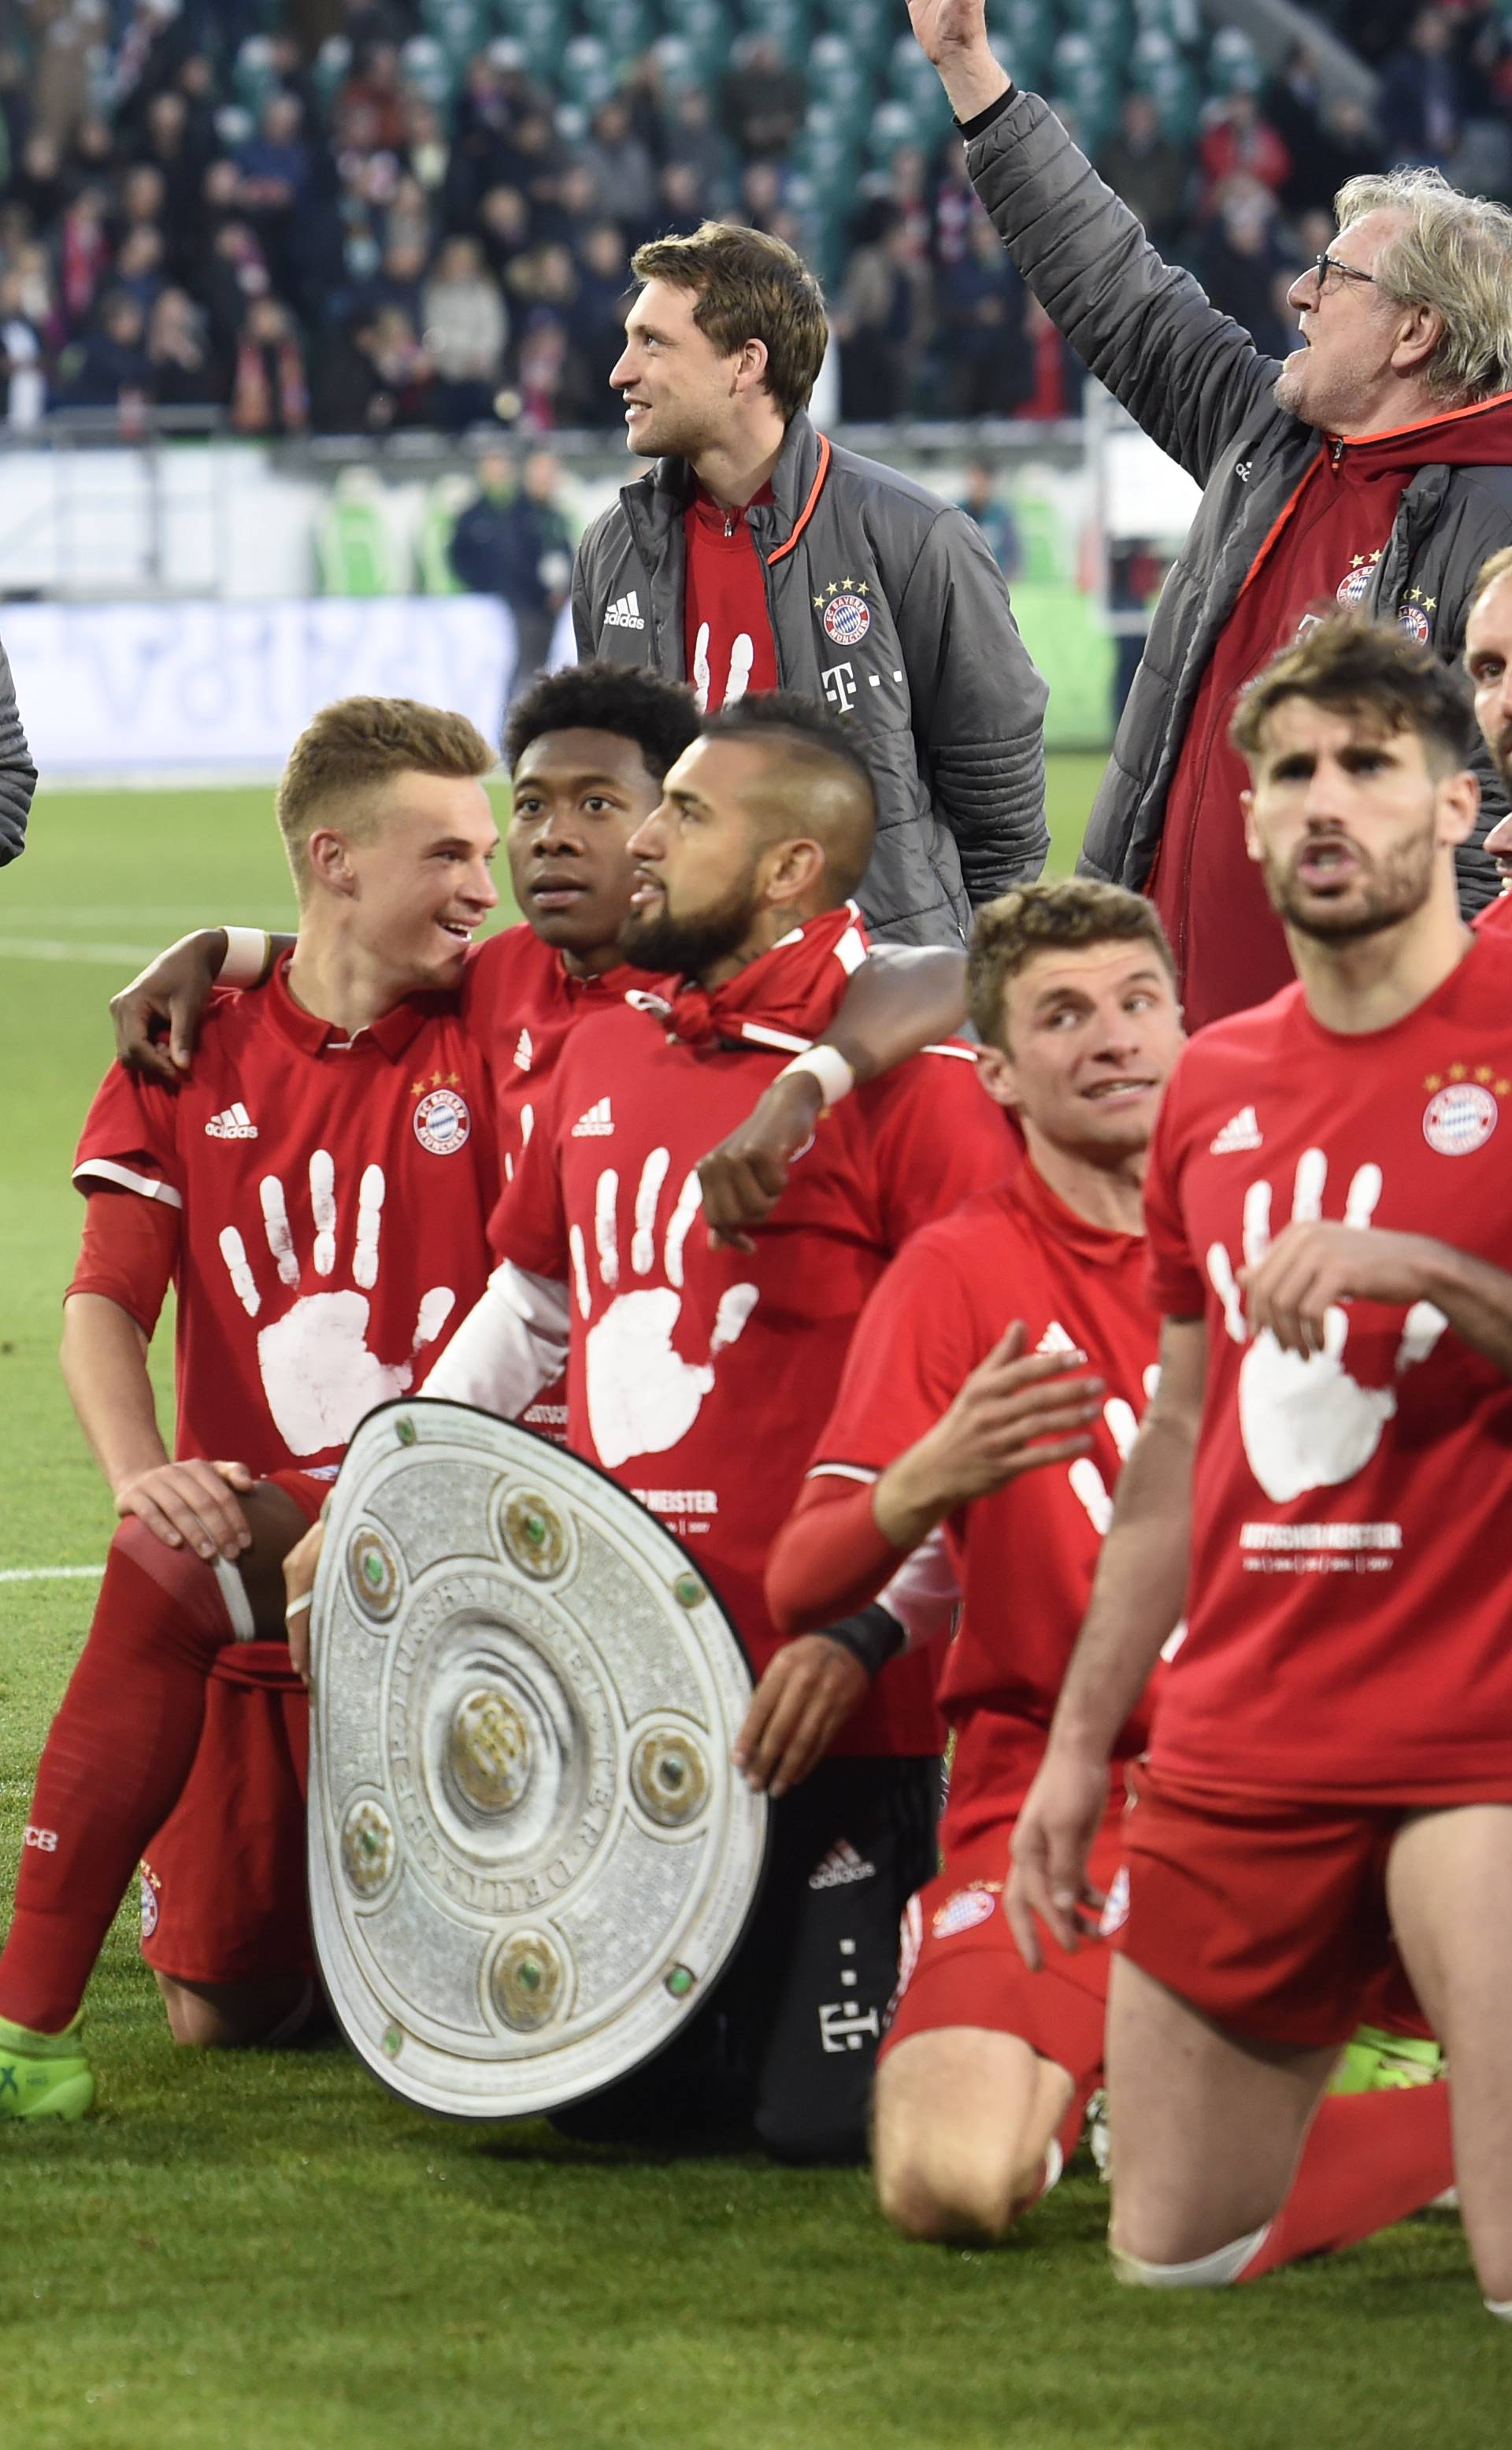 Bayern Munich coach Carlo Ancelotti  and his players celebrate after the match after winning the Bundesliga